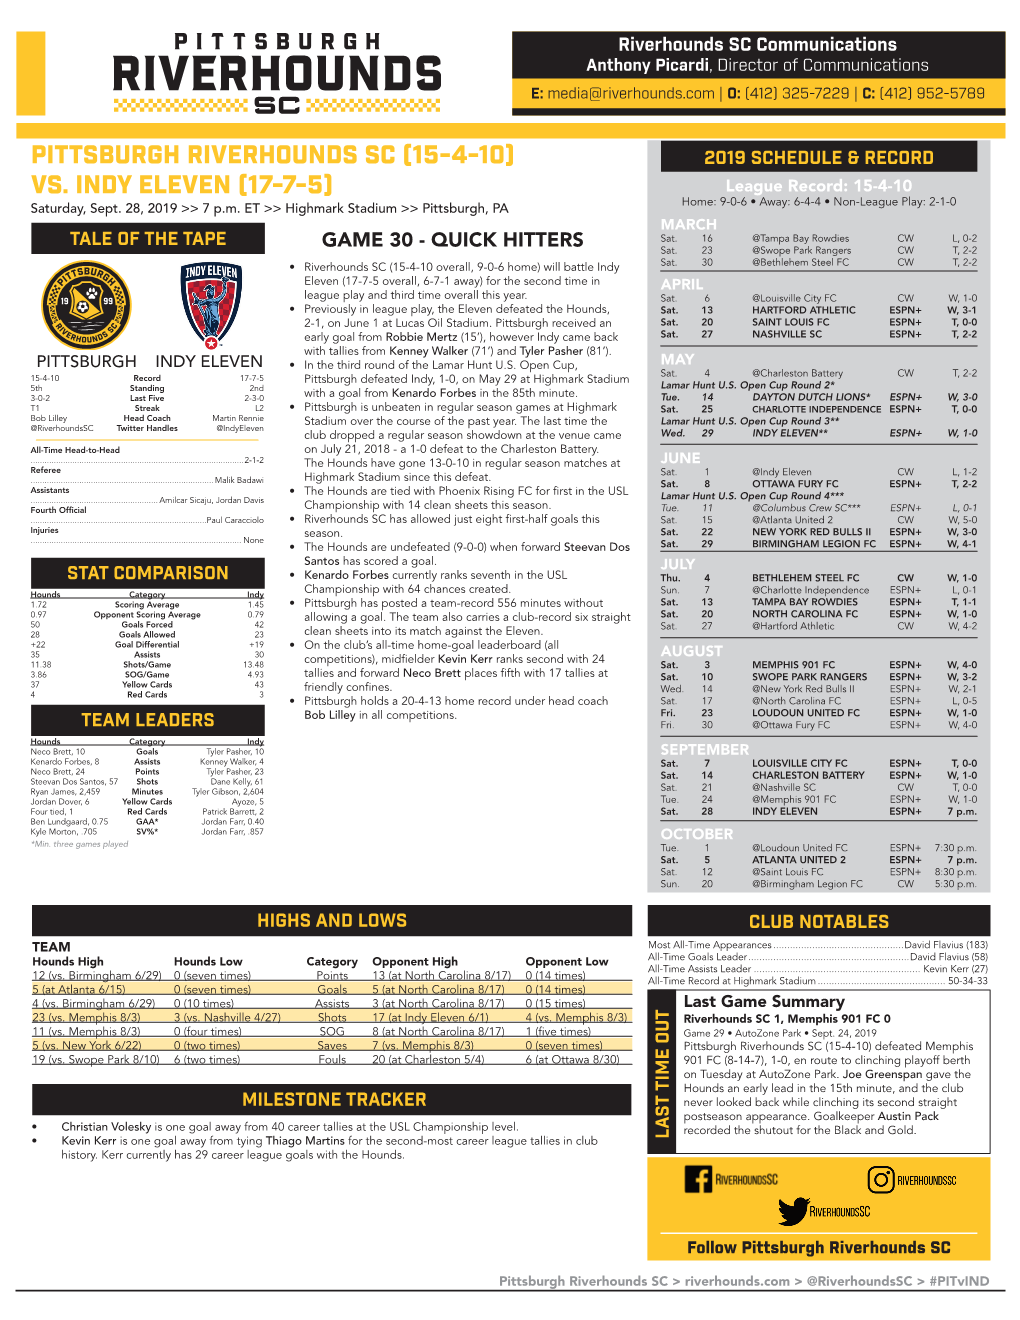 Pittsburgh Riverhounds Sc (15-4-10) 2019 Schedule & Record Vs